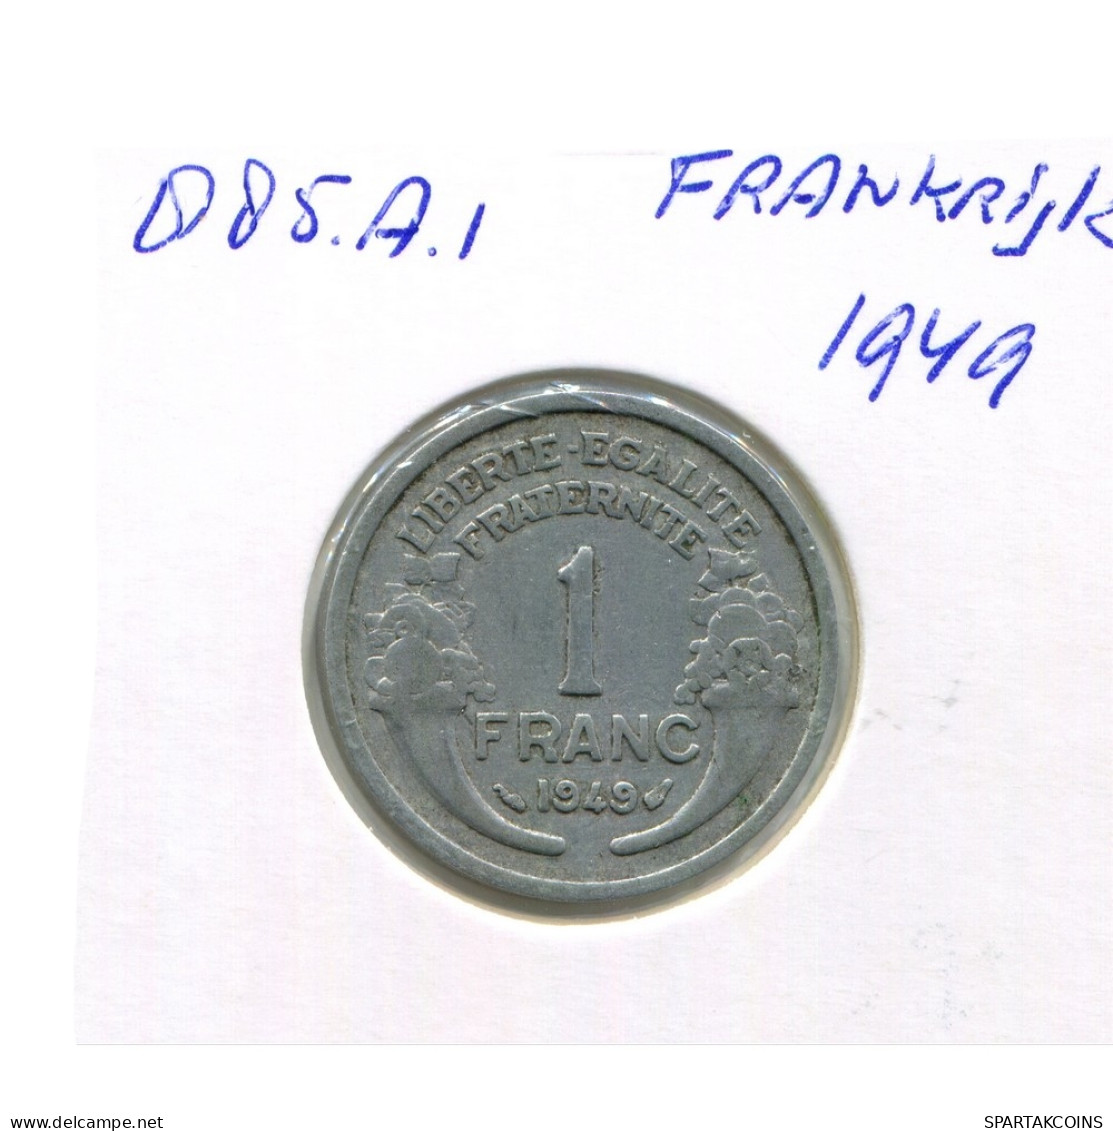 1 FRANC 1949 FRANCE Coin French Coin #AN294 - 1 Franc